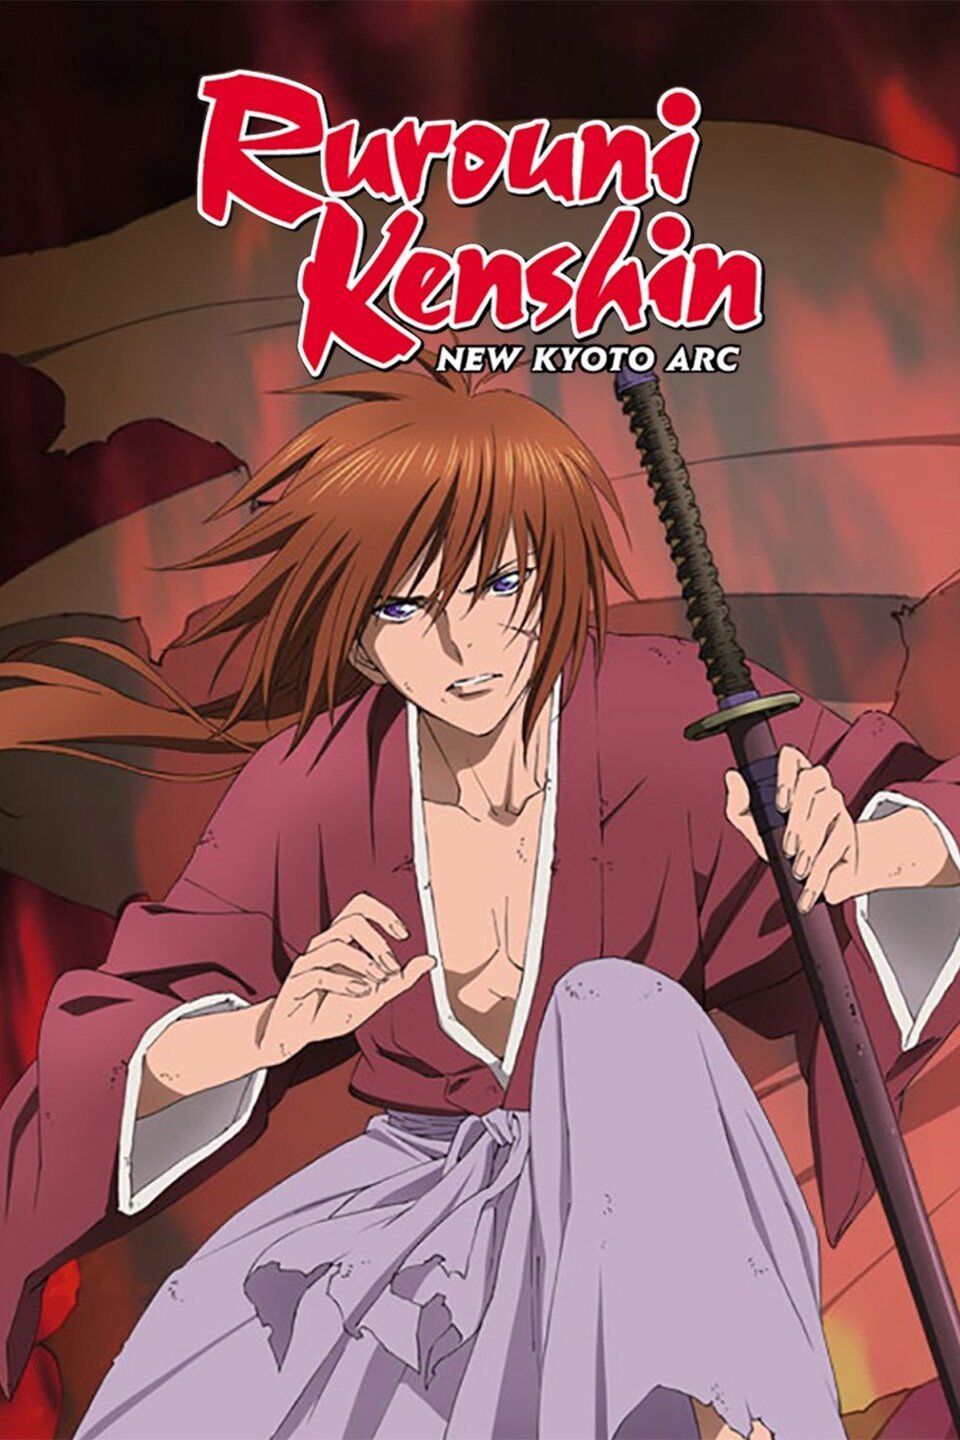 Rurouni Kenshin 10 Strongest Characters Ranked